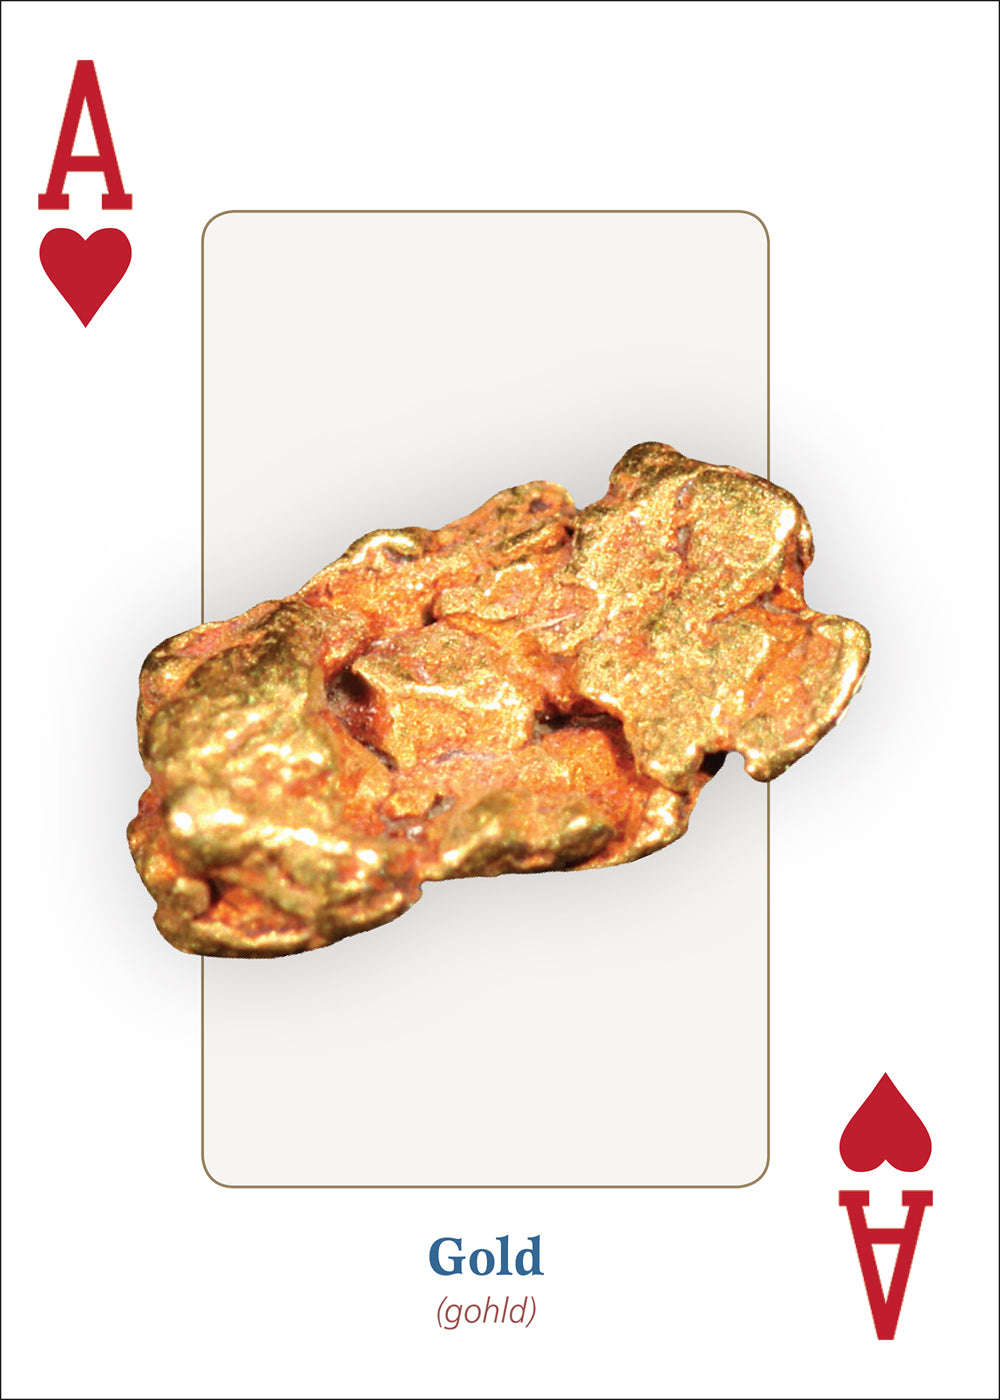 PlayingCardDecks.com-Rocks & Minerals Playing Cards